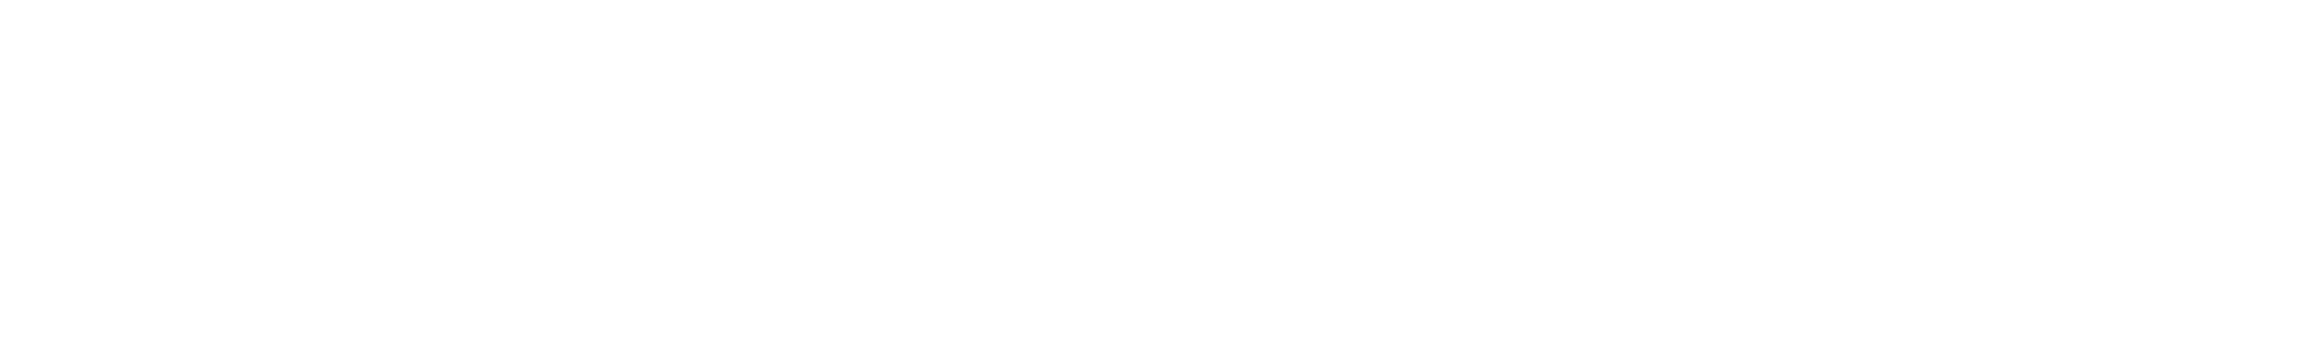 fulop logo white